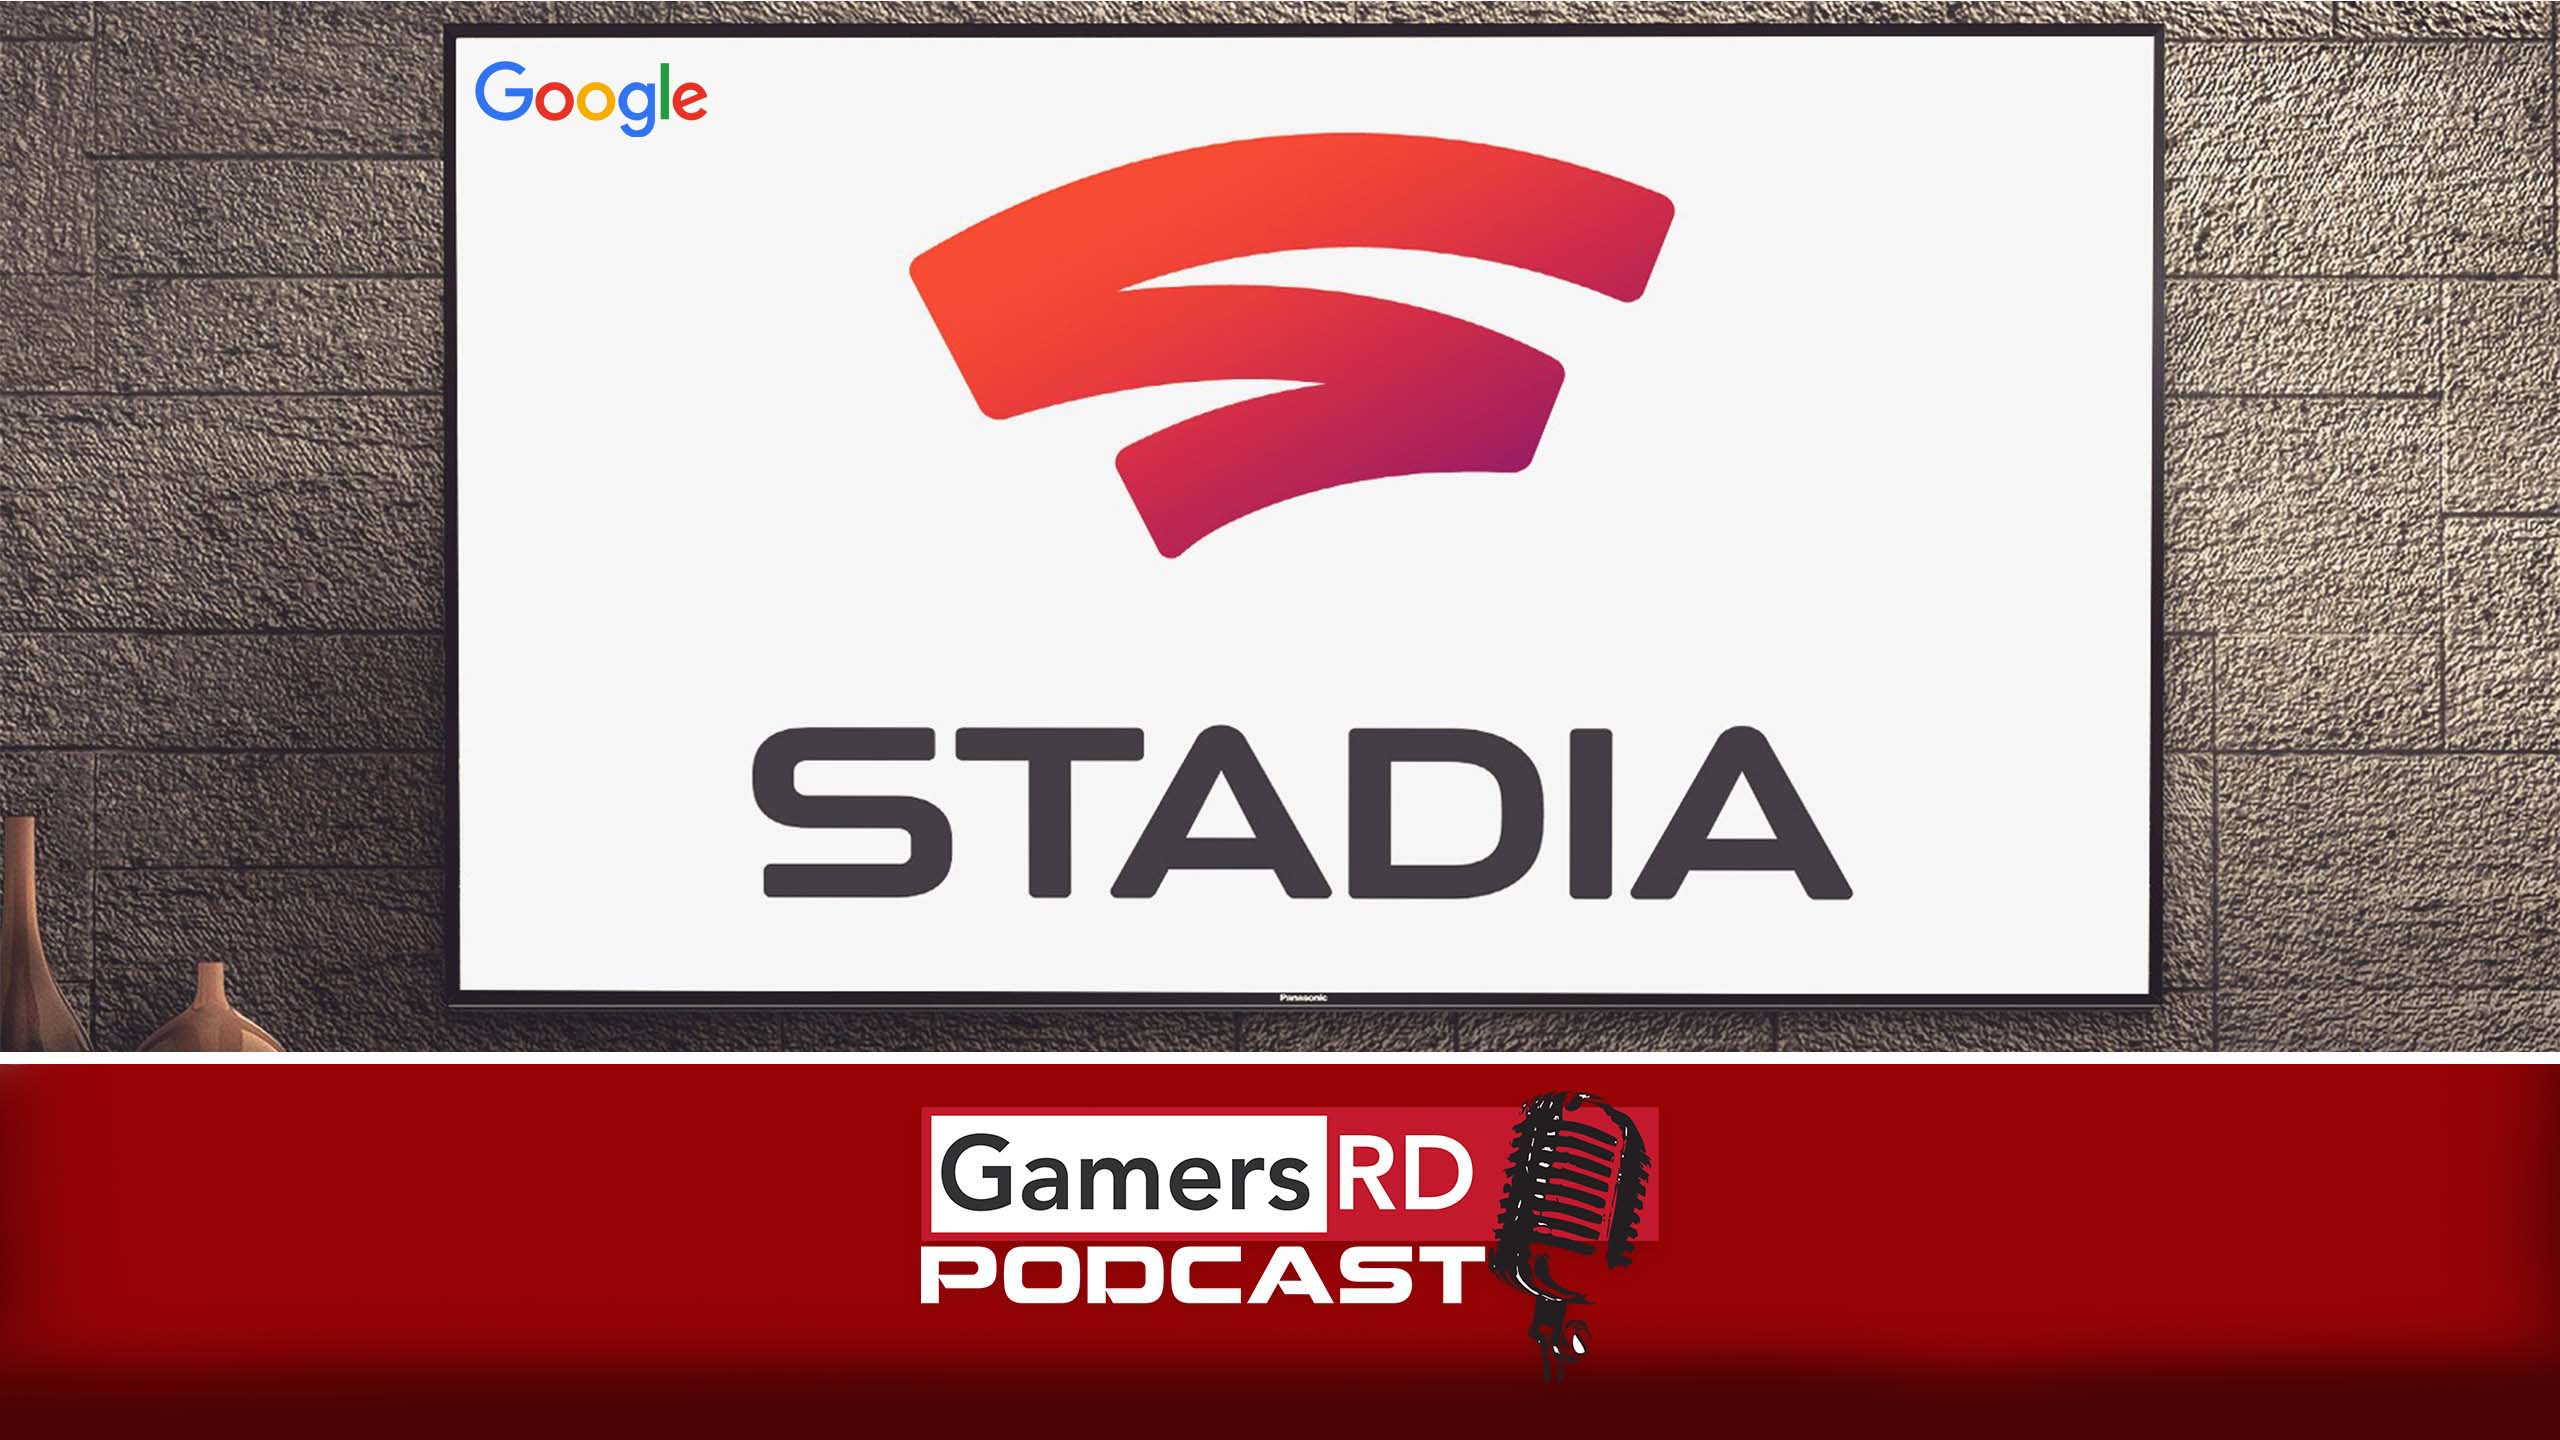 GamersRD Podcast #61, Google Stadia, impresiones, google, 1-GamersRD